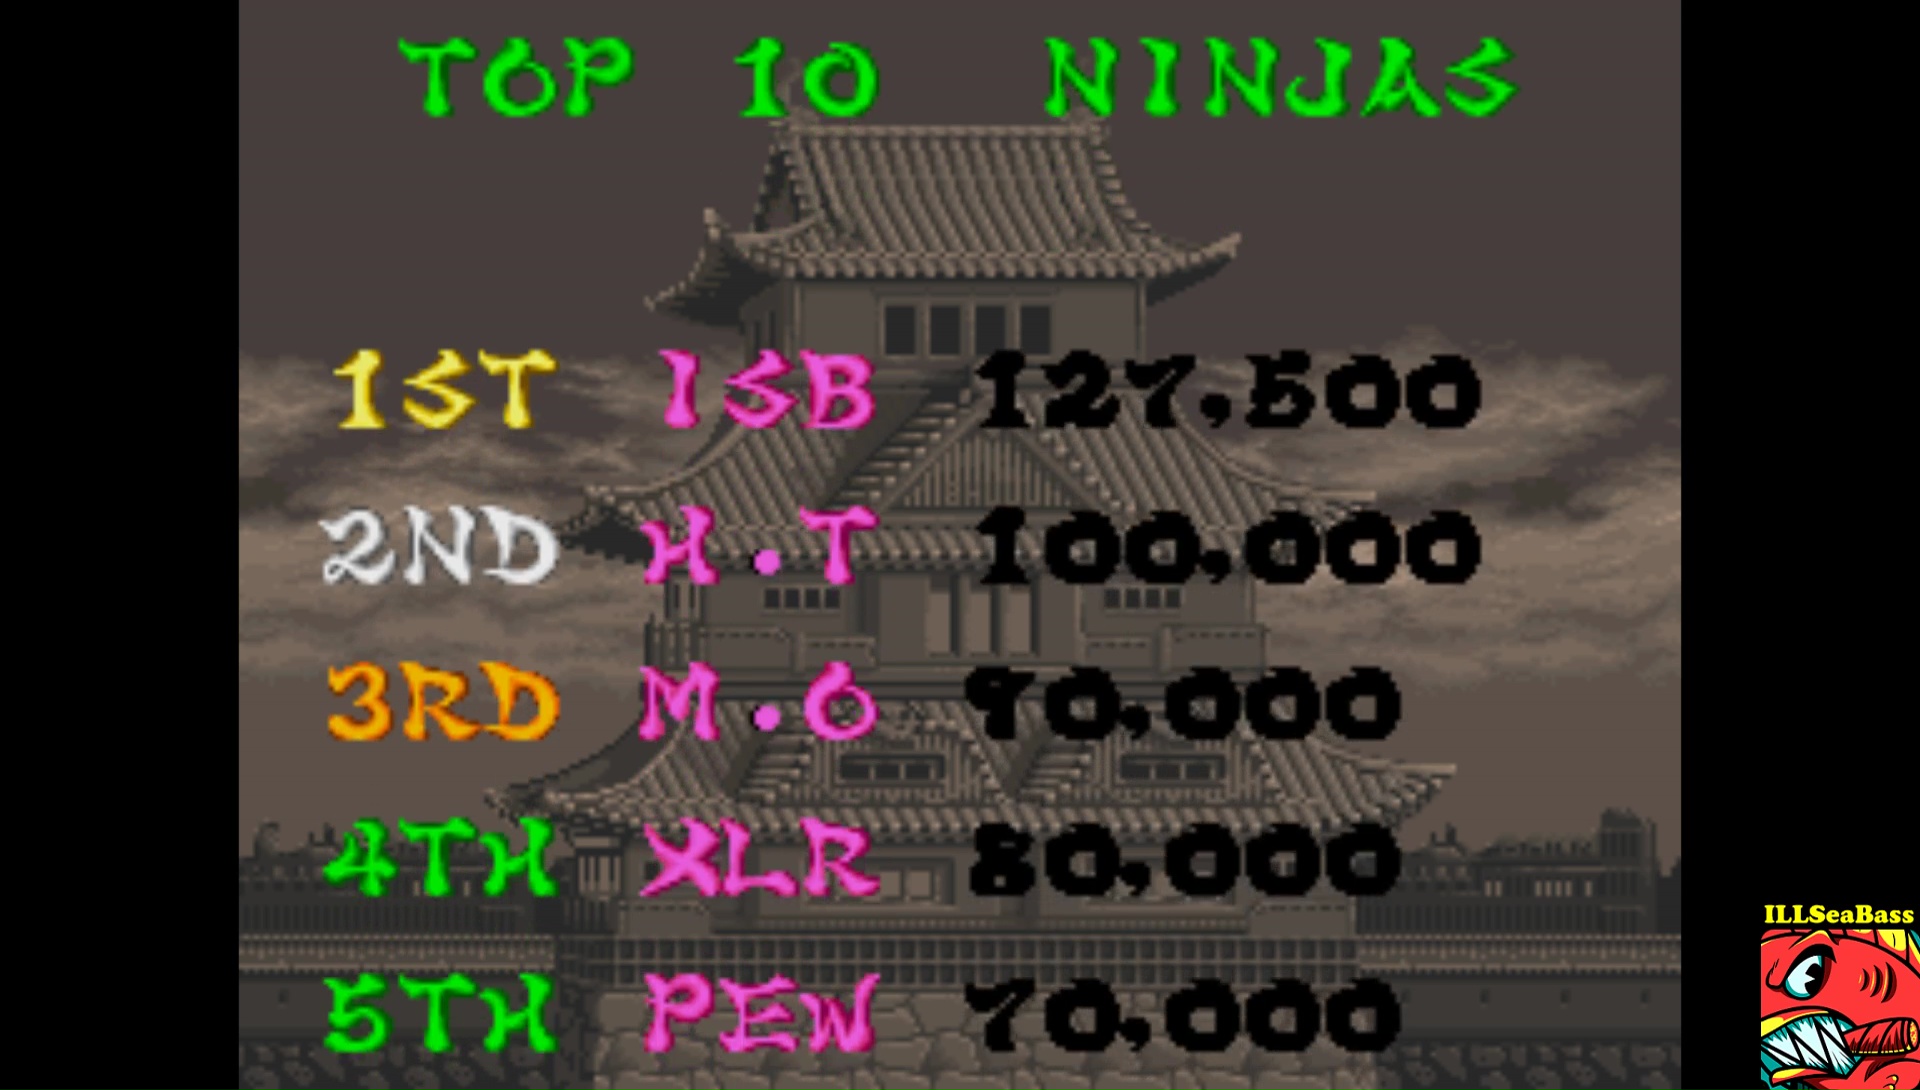 ILLSeaBass: Mystic Warriors: Wrath Of The Ninjas [mystwarr] (Arcade Emulated / M.A.M.E.) 127,500 points on 2017-09-04 11:41:03